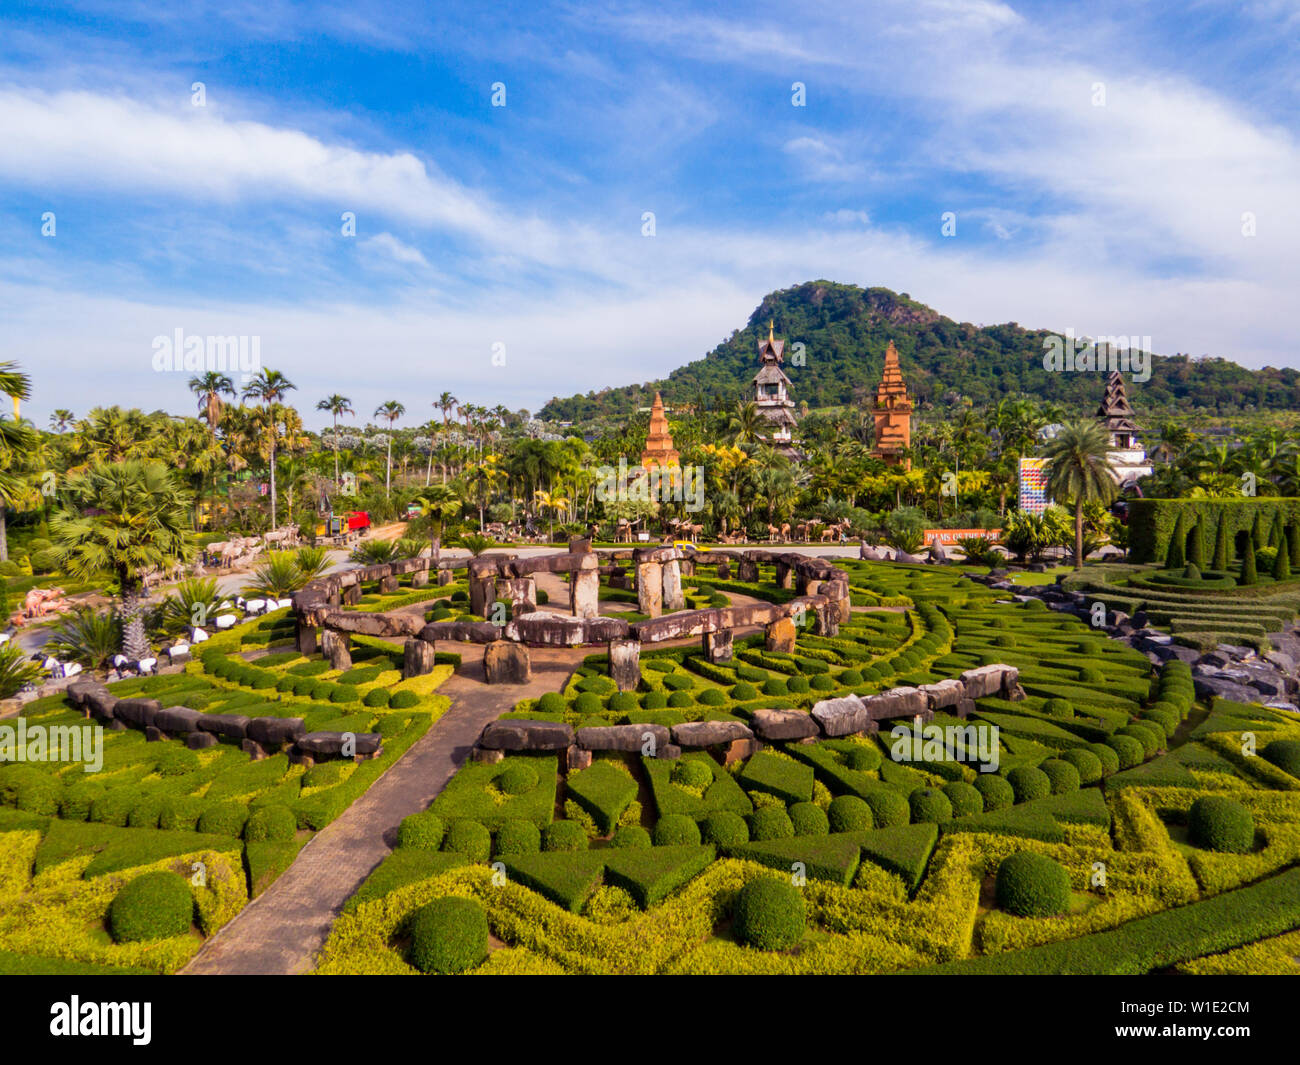 Avis de Nong Nooch Tropical Botanical Garden à Pattaya, Thaïlande Banque D'Images